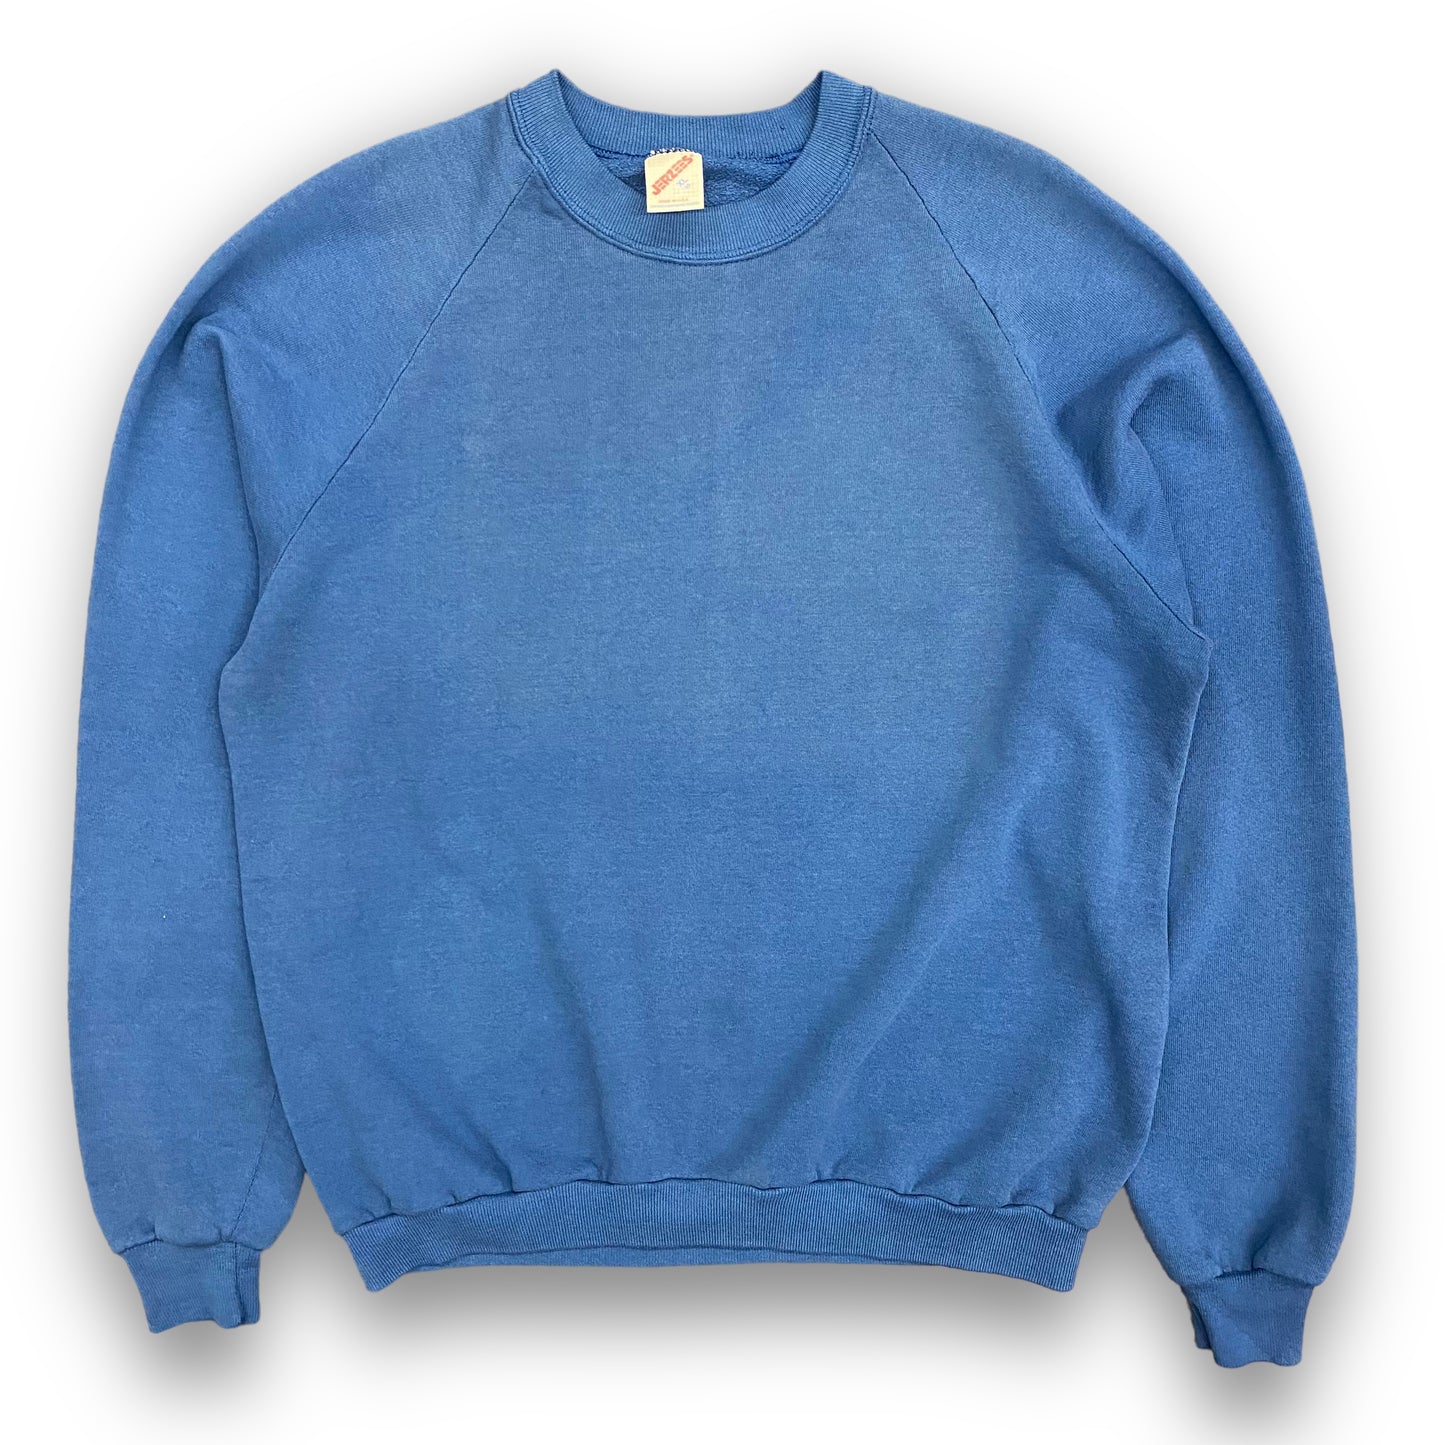 Early 90s Jerzees Blue Raglan Crewneck Sweatshirt - Size XL